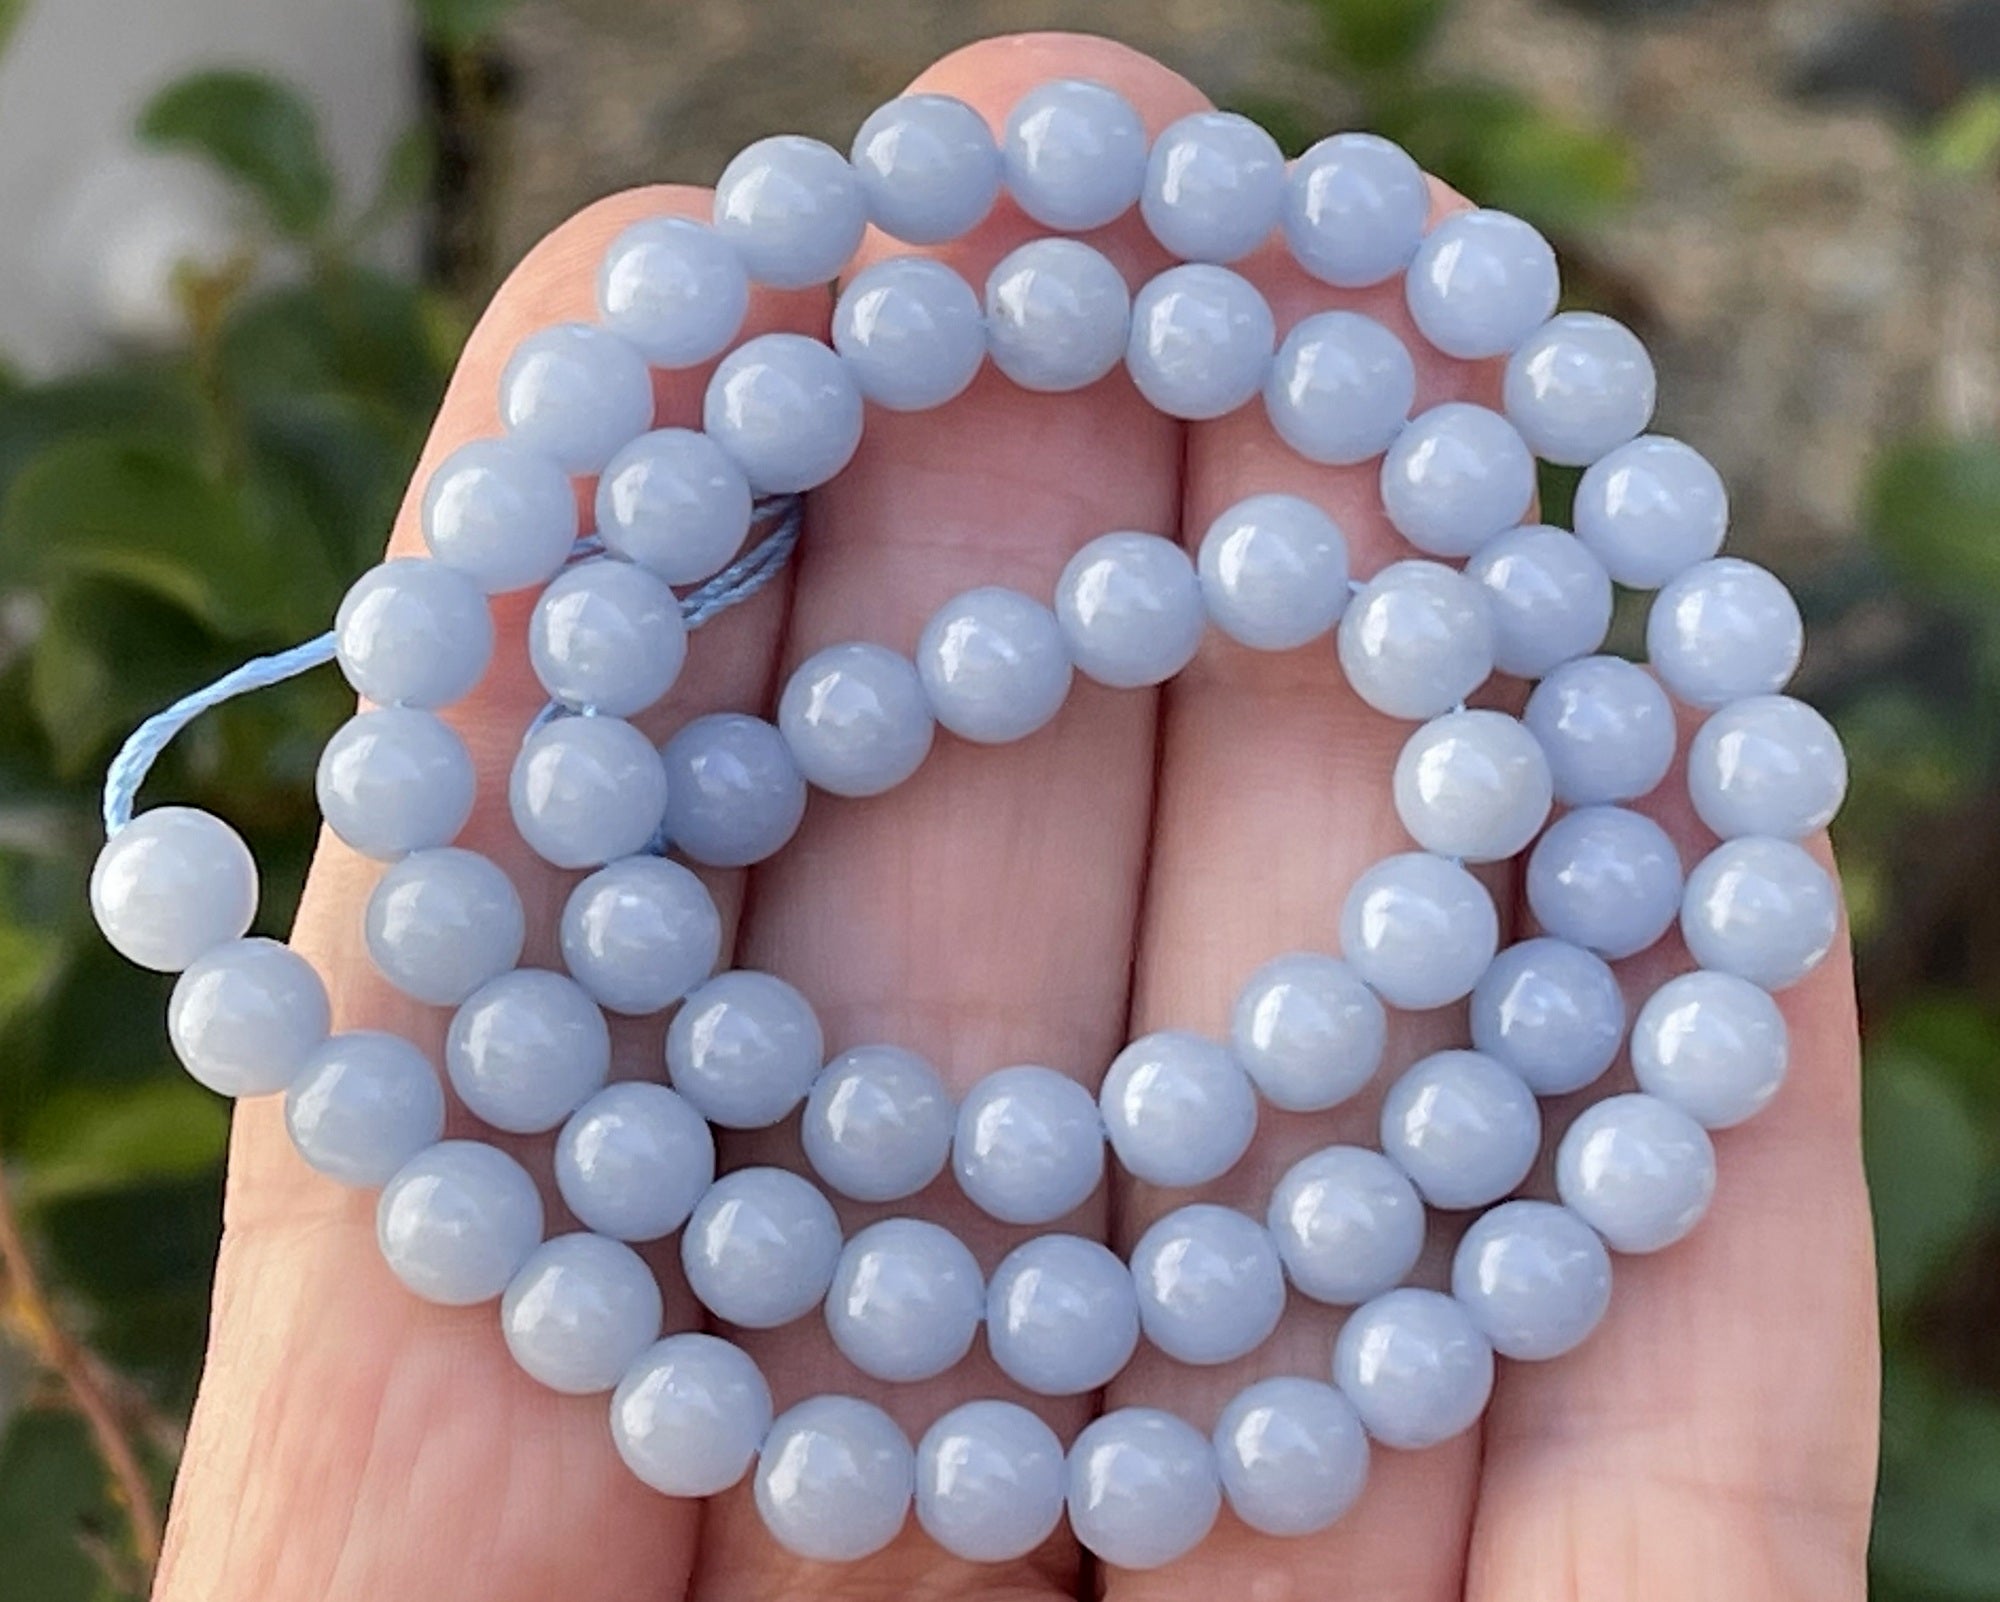 Blue Angelite 6mm round natural gemstone beads 15.5" strand - Oz Beads 